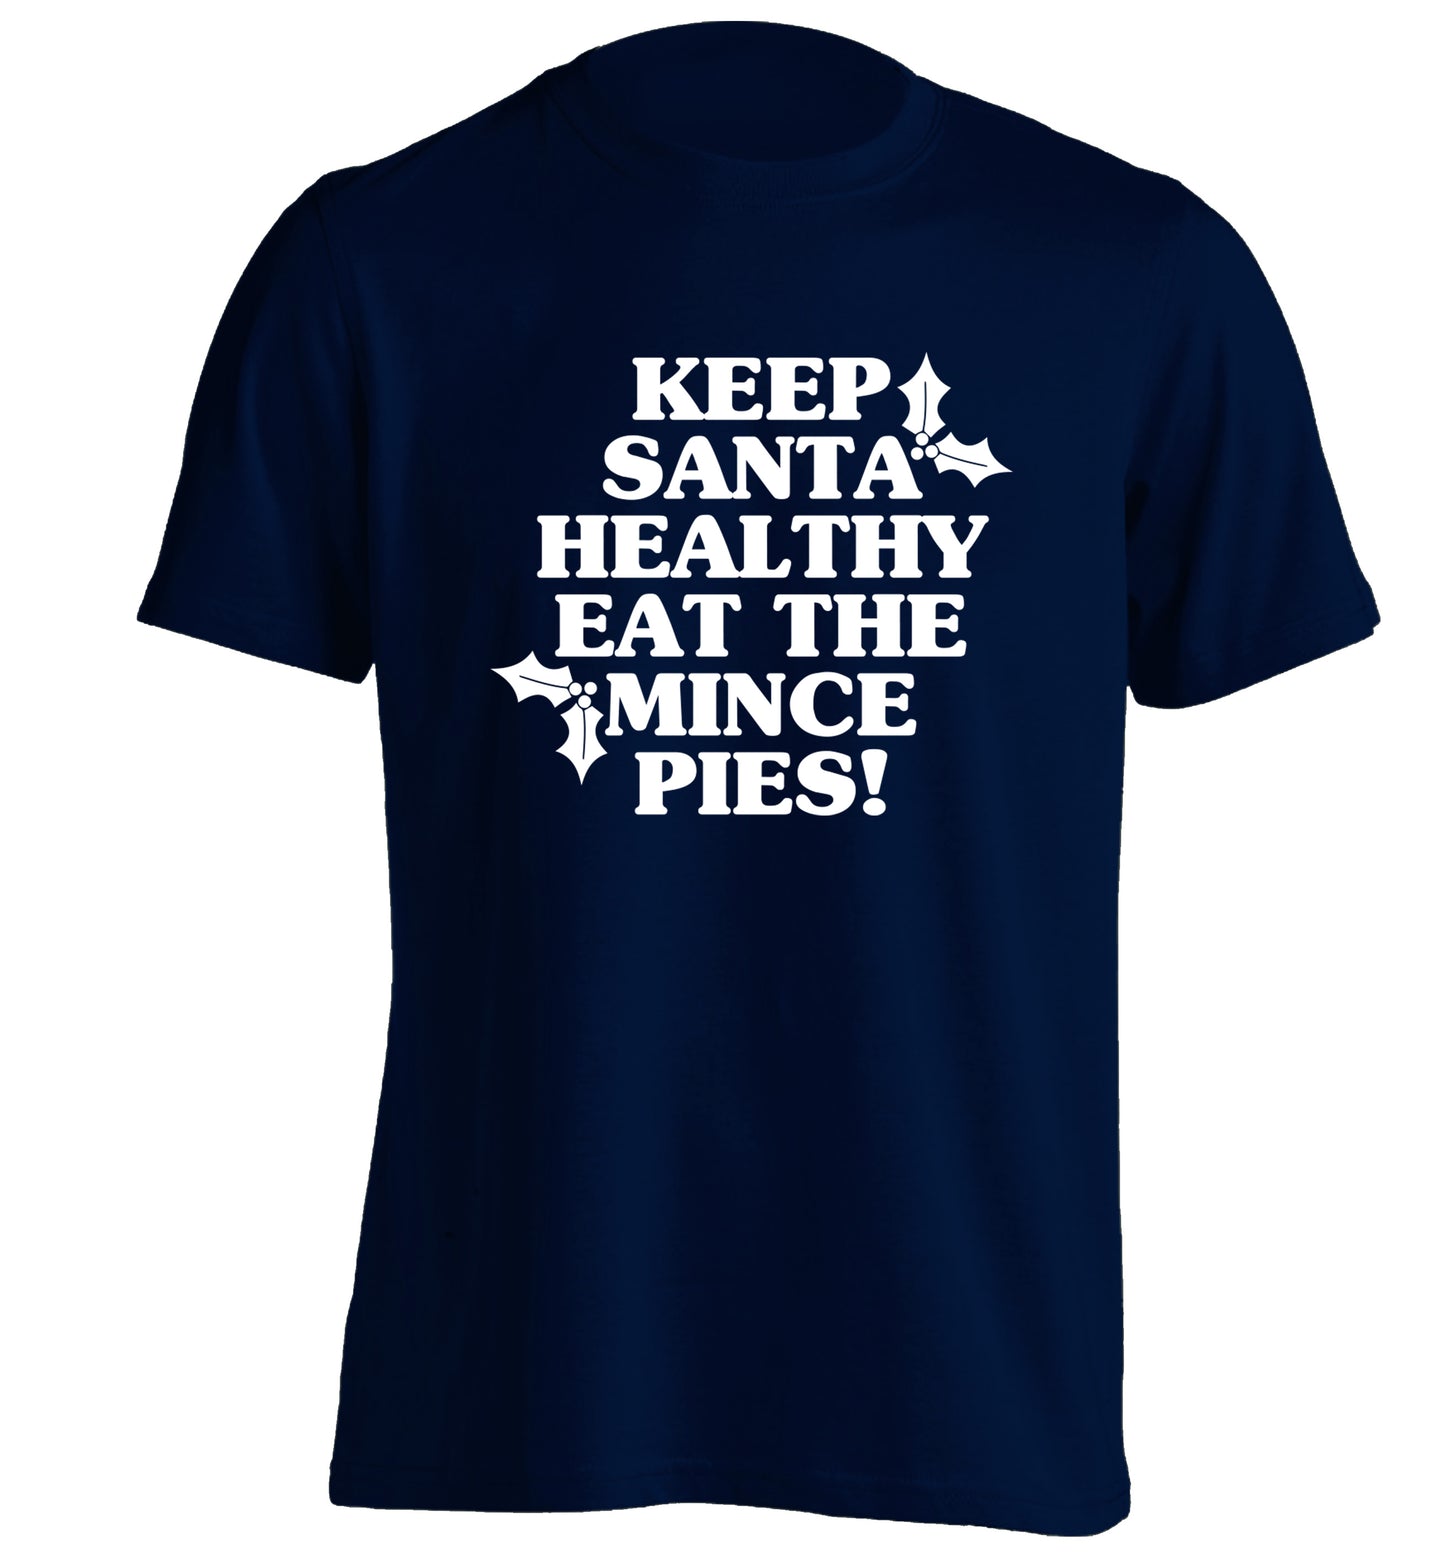 Keep santa healthy eat the mince pies adults unisex navy Tshirt 2XL